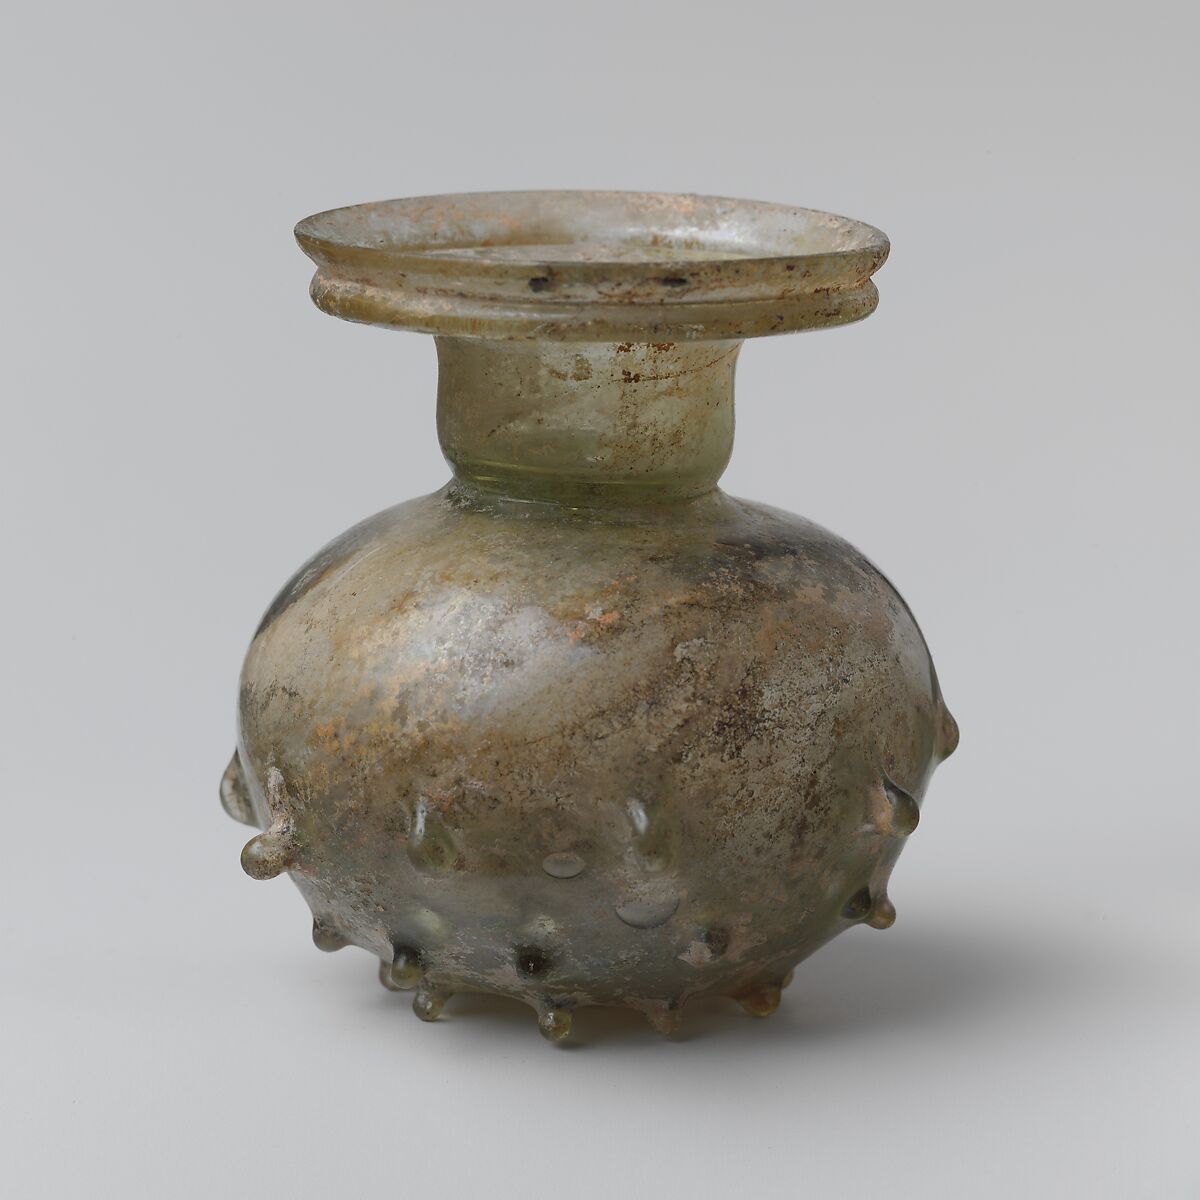 Glass sprinkler flask, Glass, Roman, Eastern Mediterranean 